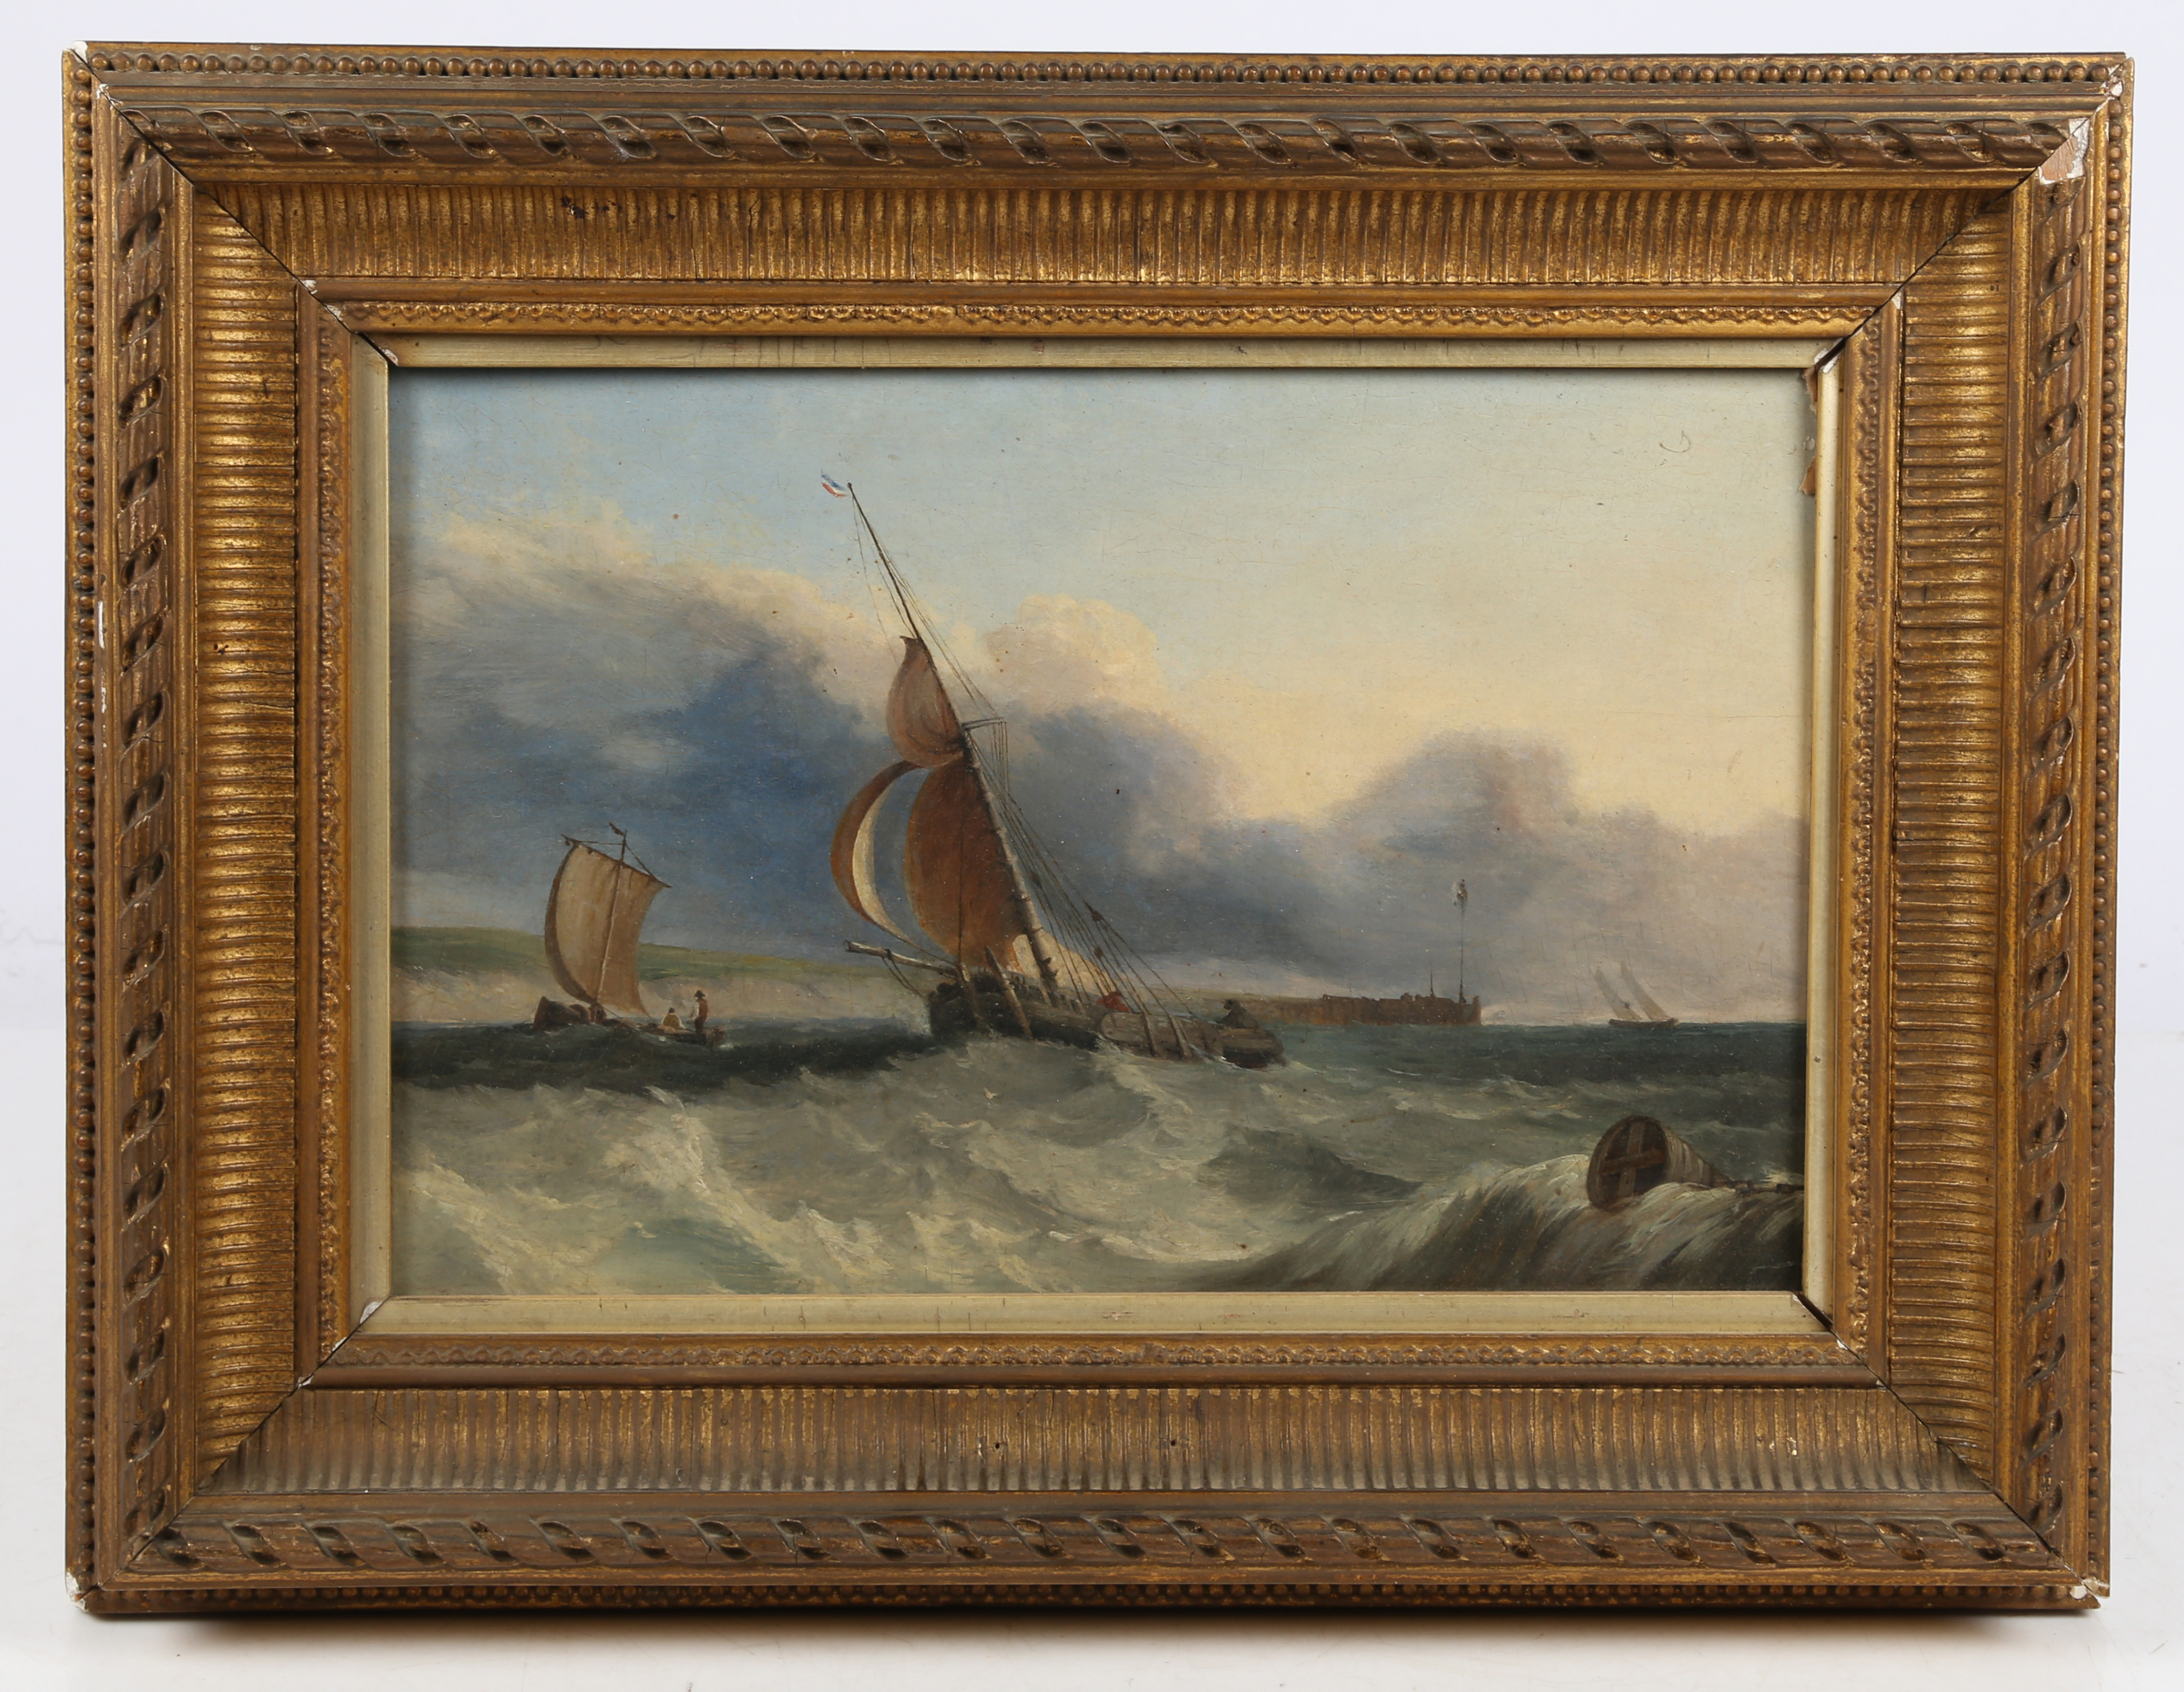 EDMUND JOHN NIEMAN (BRITISH 1813-1876) "FISHING BOATS OF THE COAST".